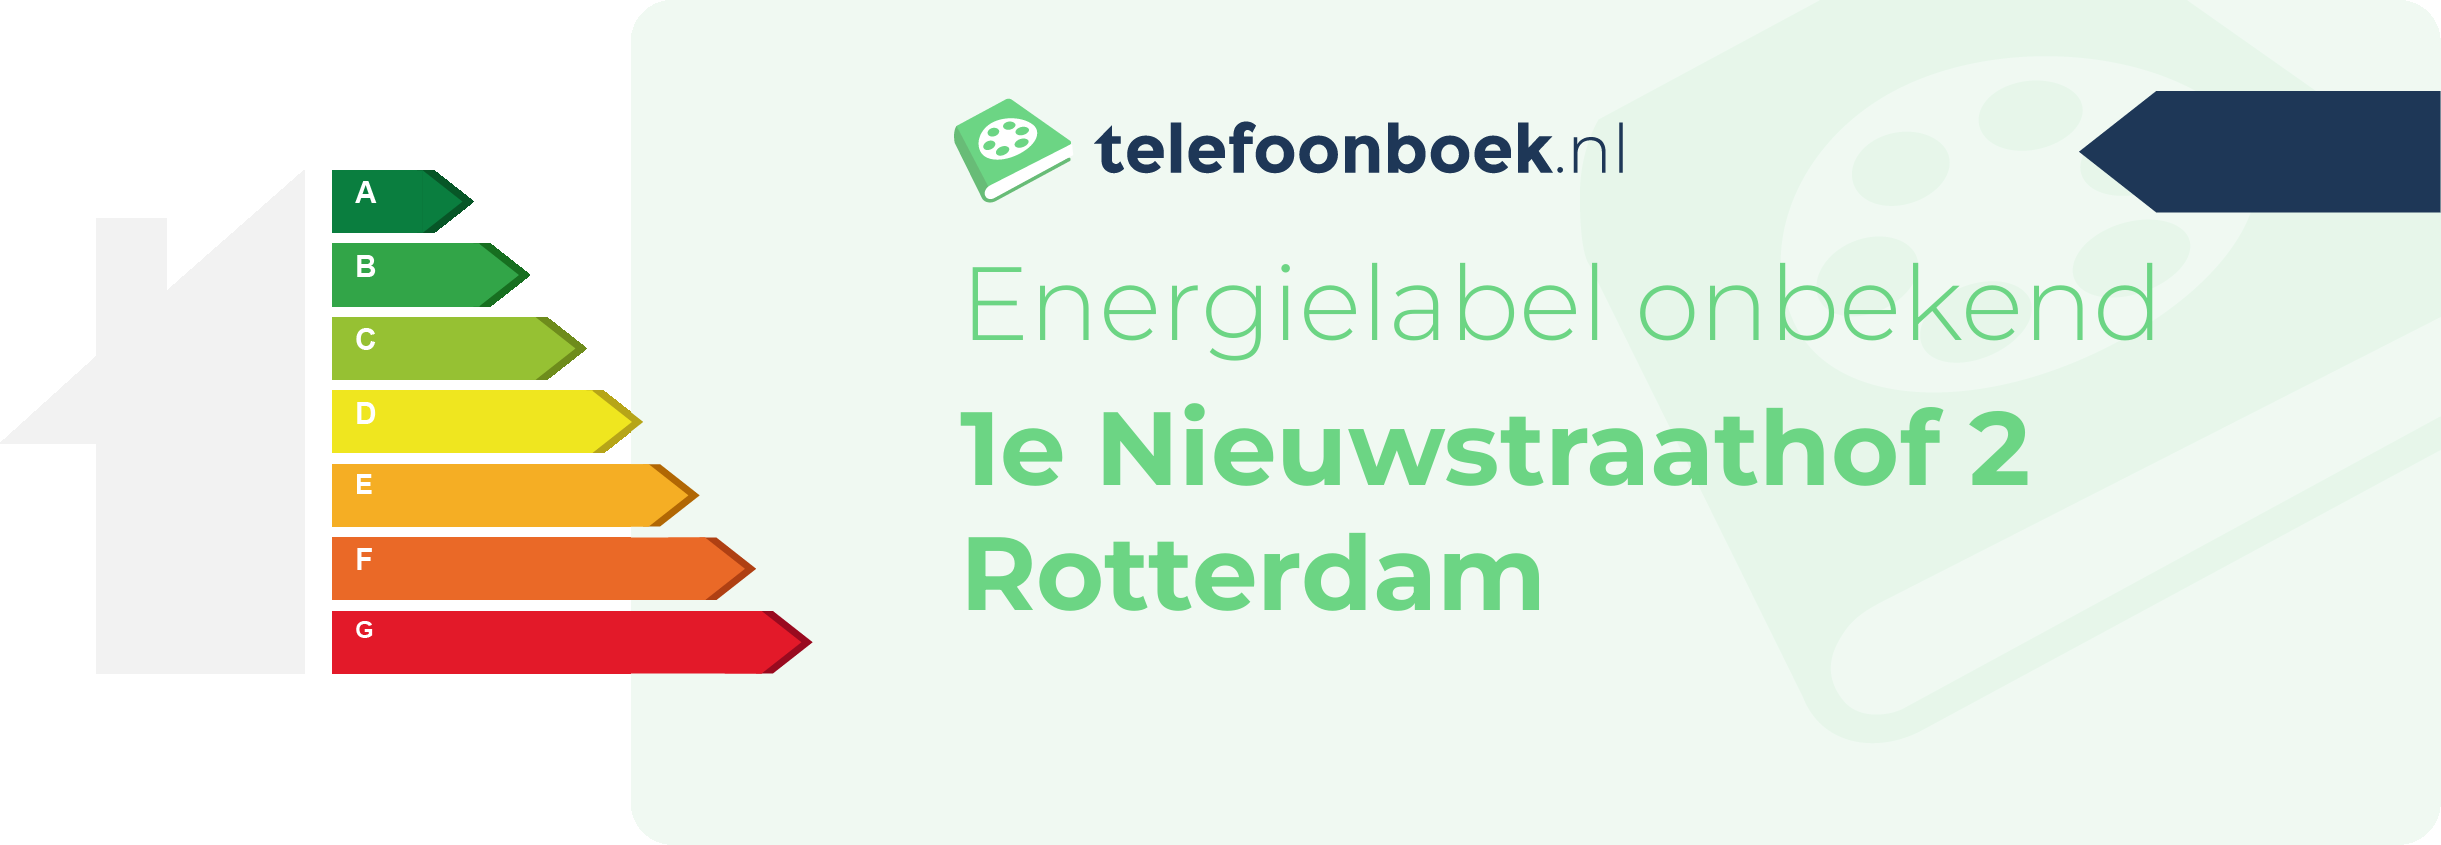 Energielabel 1e Nieuwstraathof 2 Rotterdam